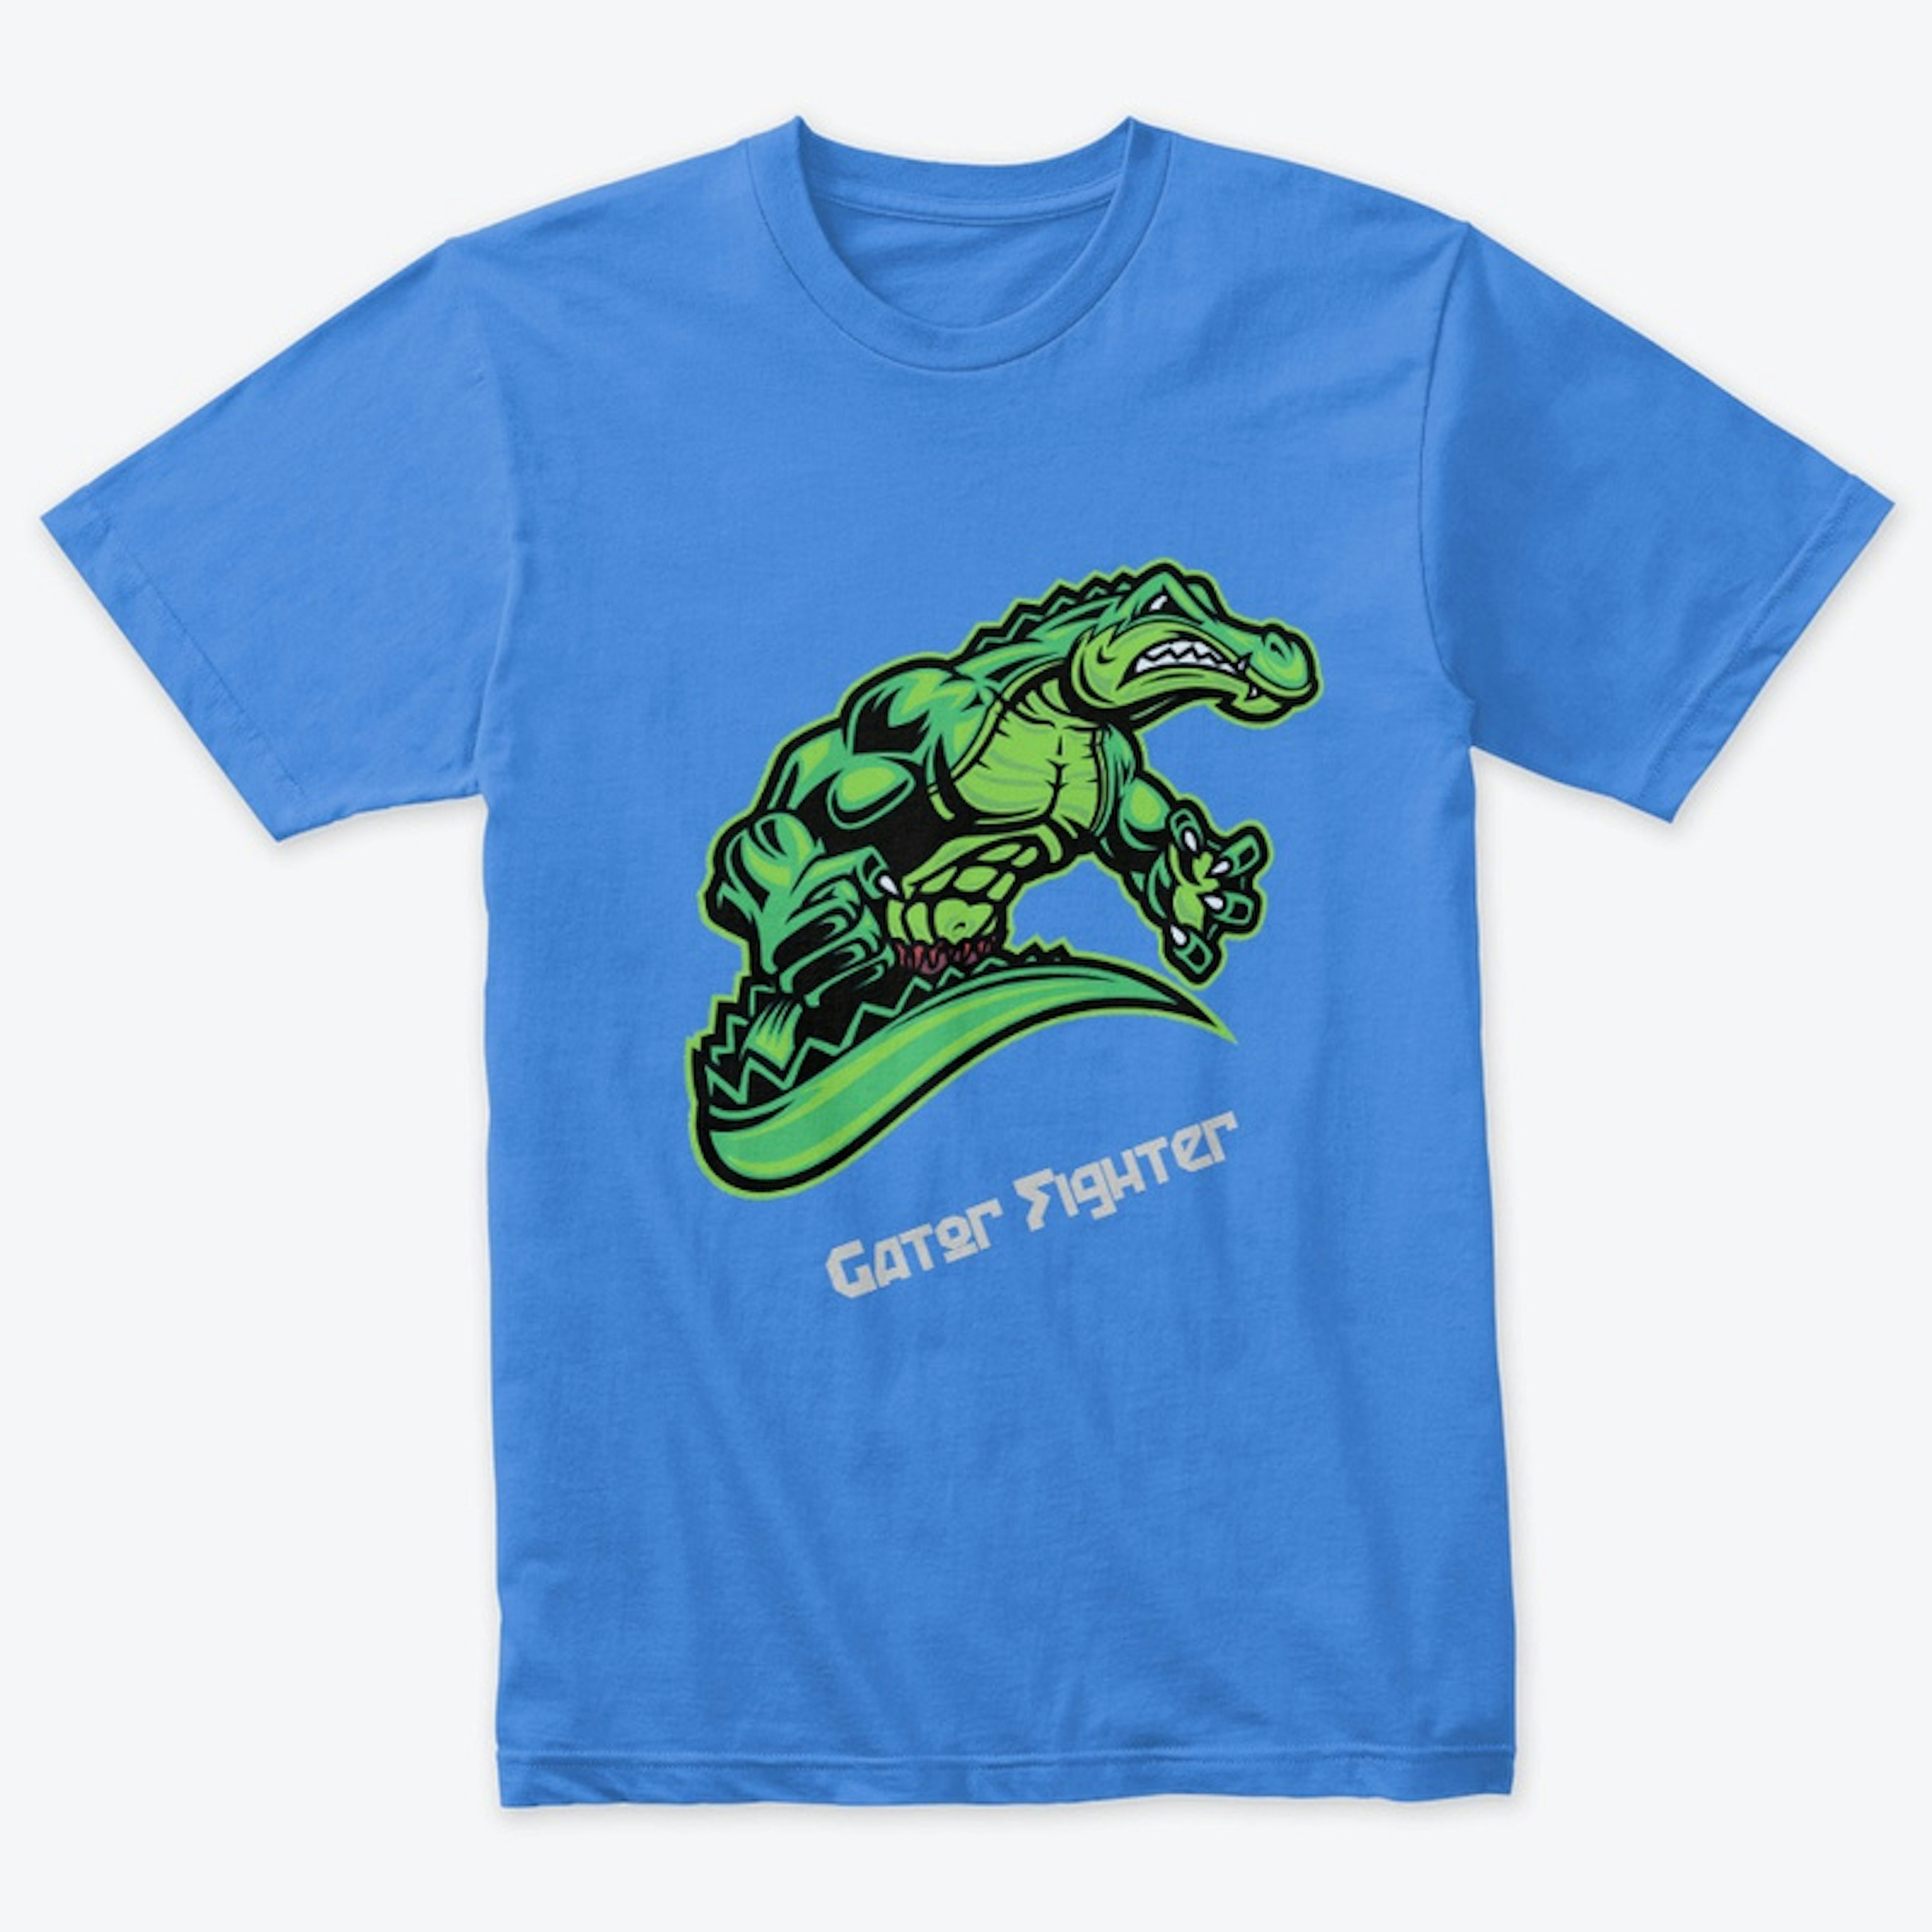 Gator Fighter amazing T-Shirt design